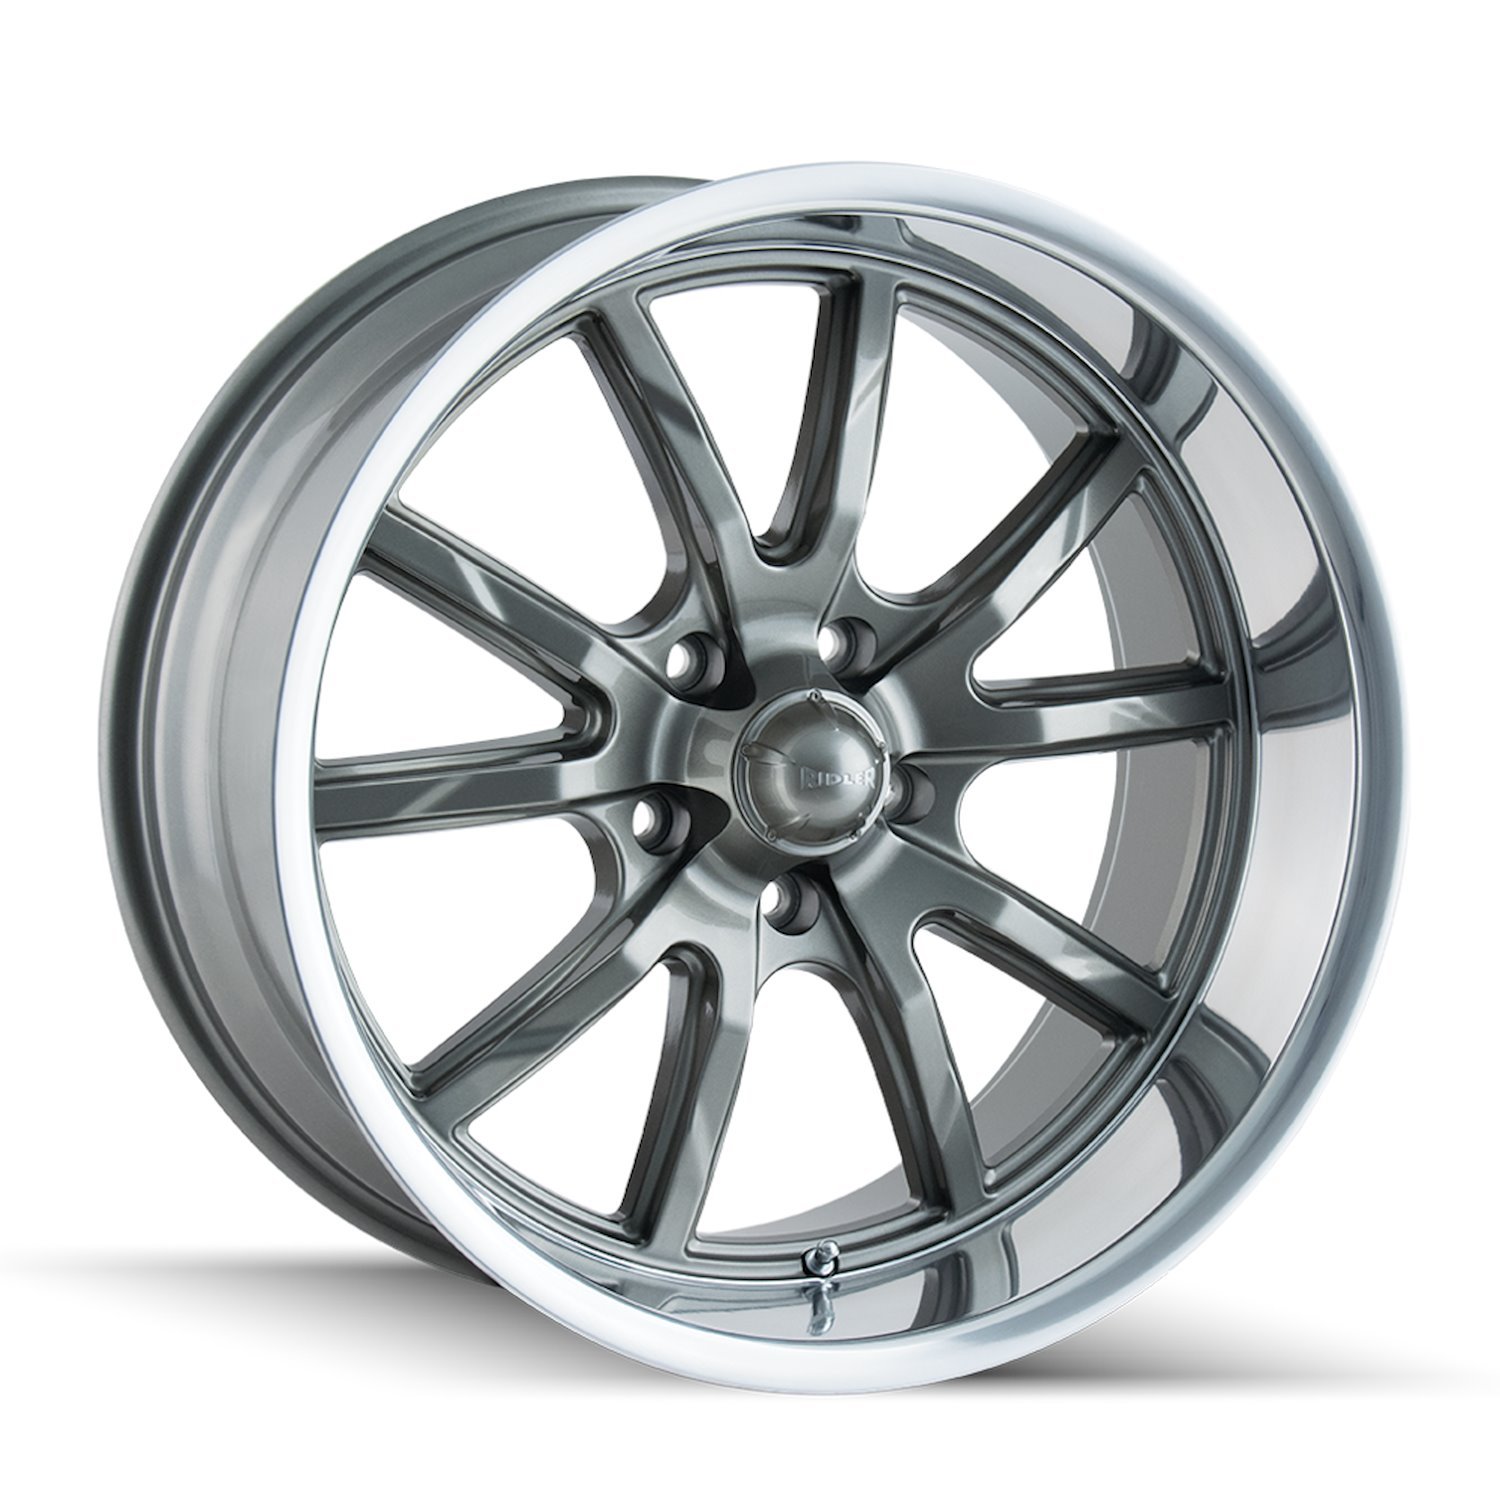 650-8965G 650-Series Wheel [Size: 18" x 9.50"] Gloss Grey Polished Finish